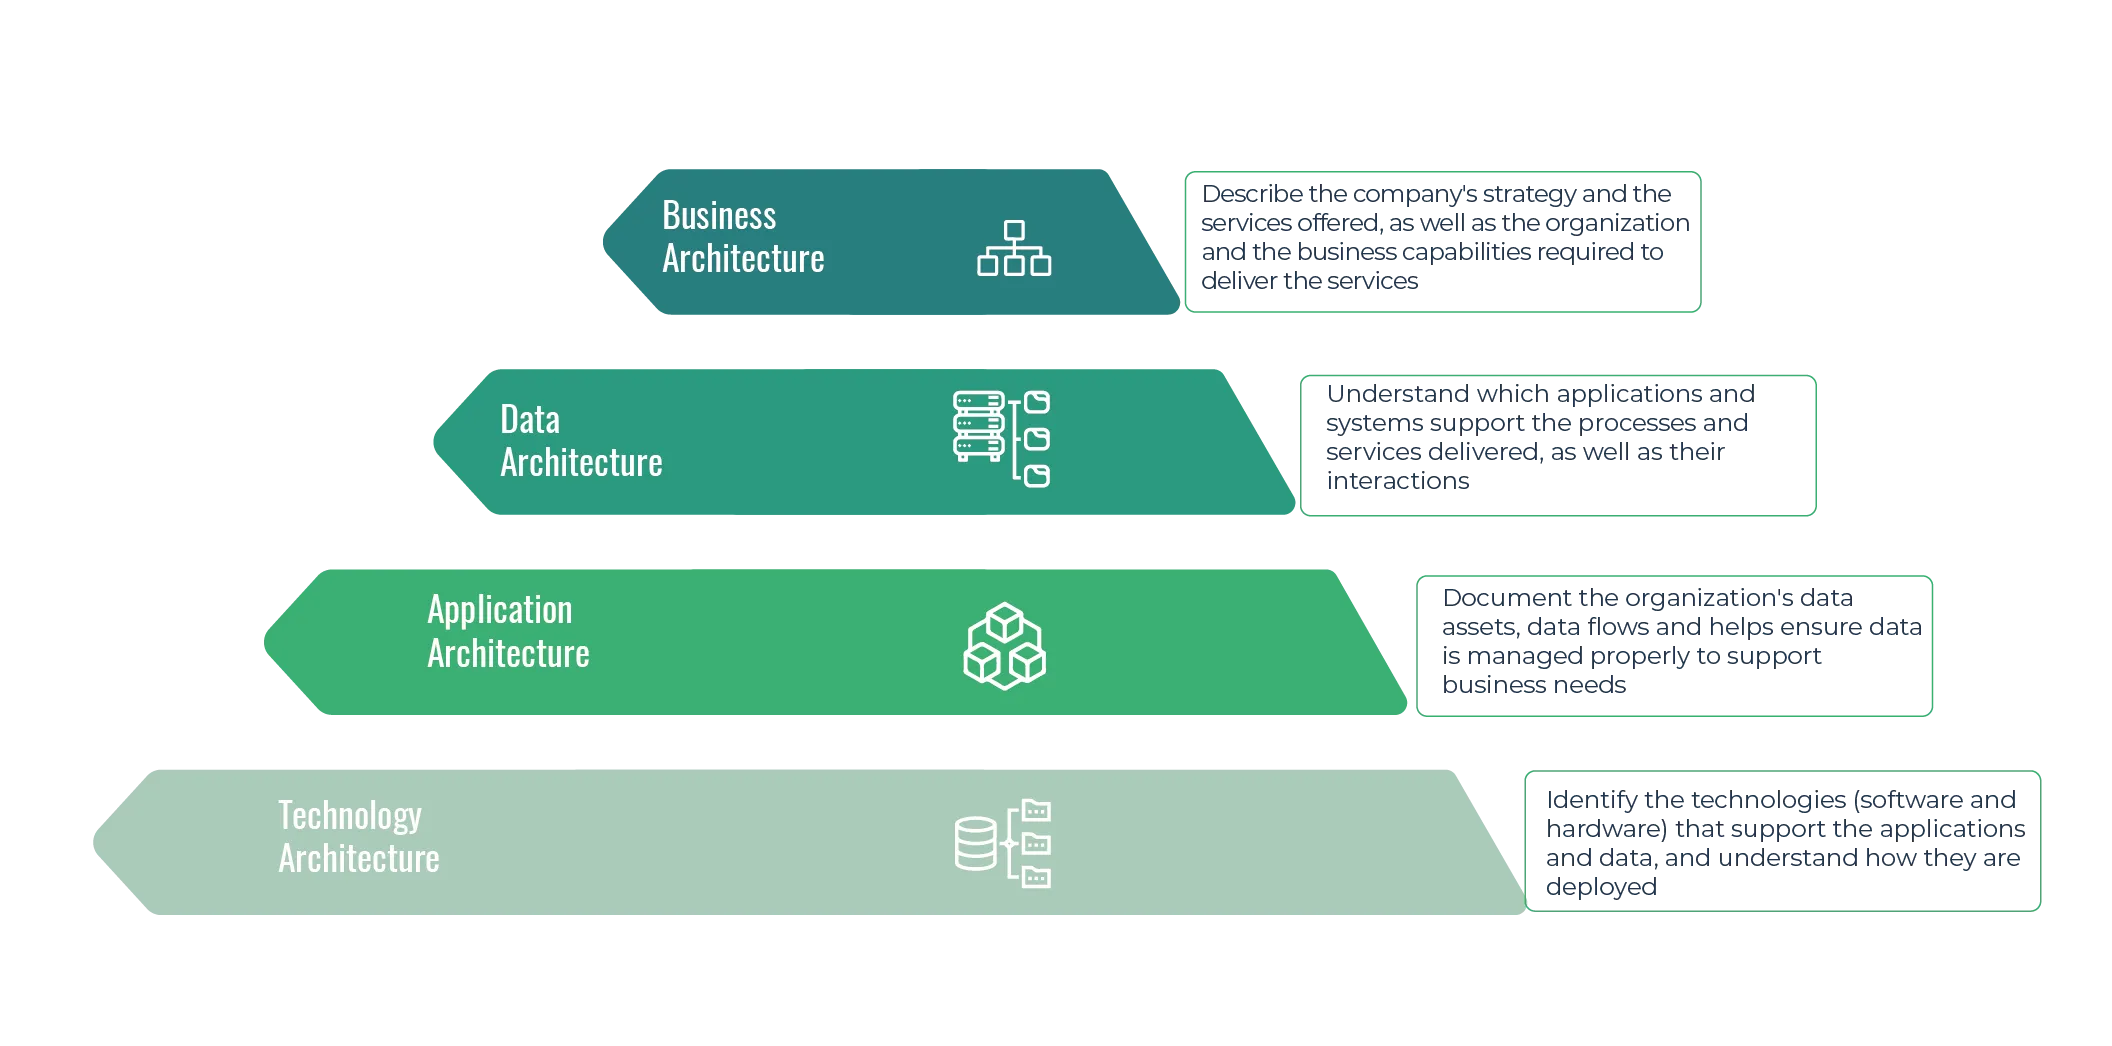 The four layers composing Enterprise Architecture